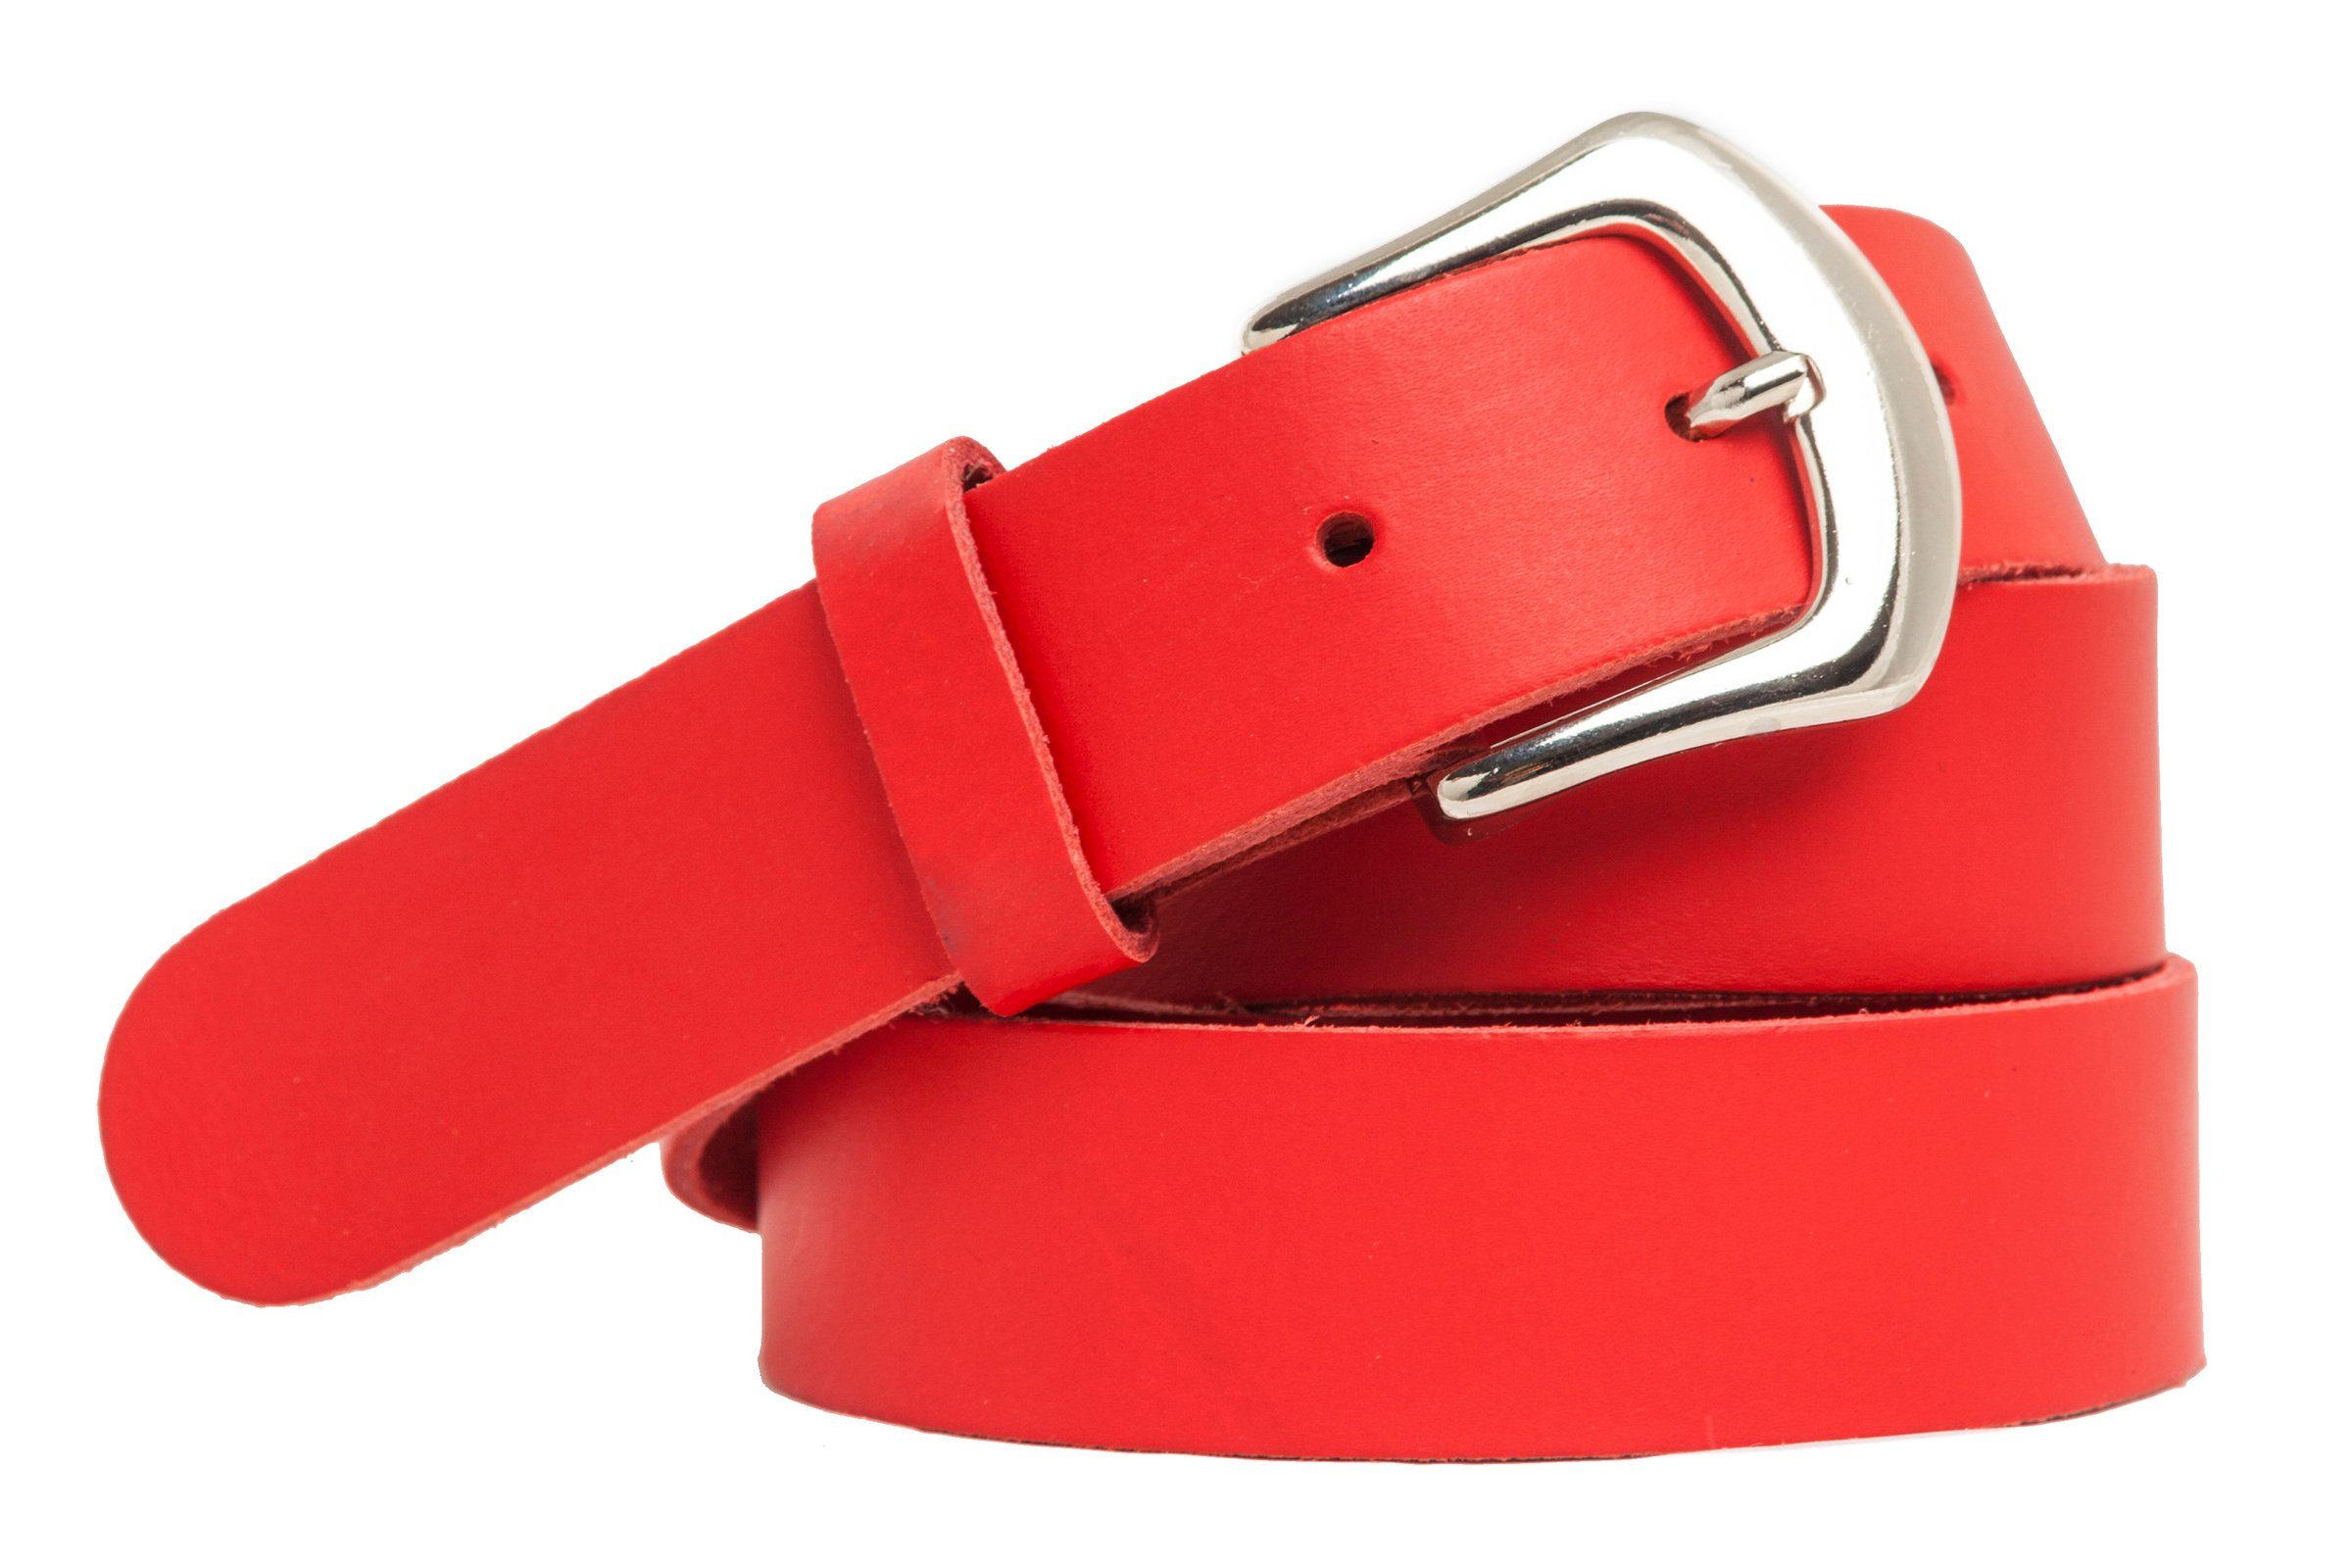 Herrengürtel 3cm shenky (Weiß und Leder Leder) Rot, Gürtel Breite Ledergürtel Damengürtel glattes aus